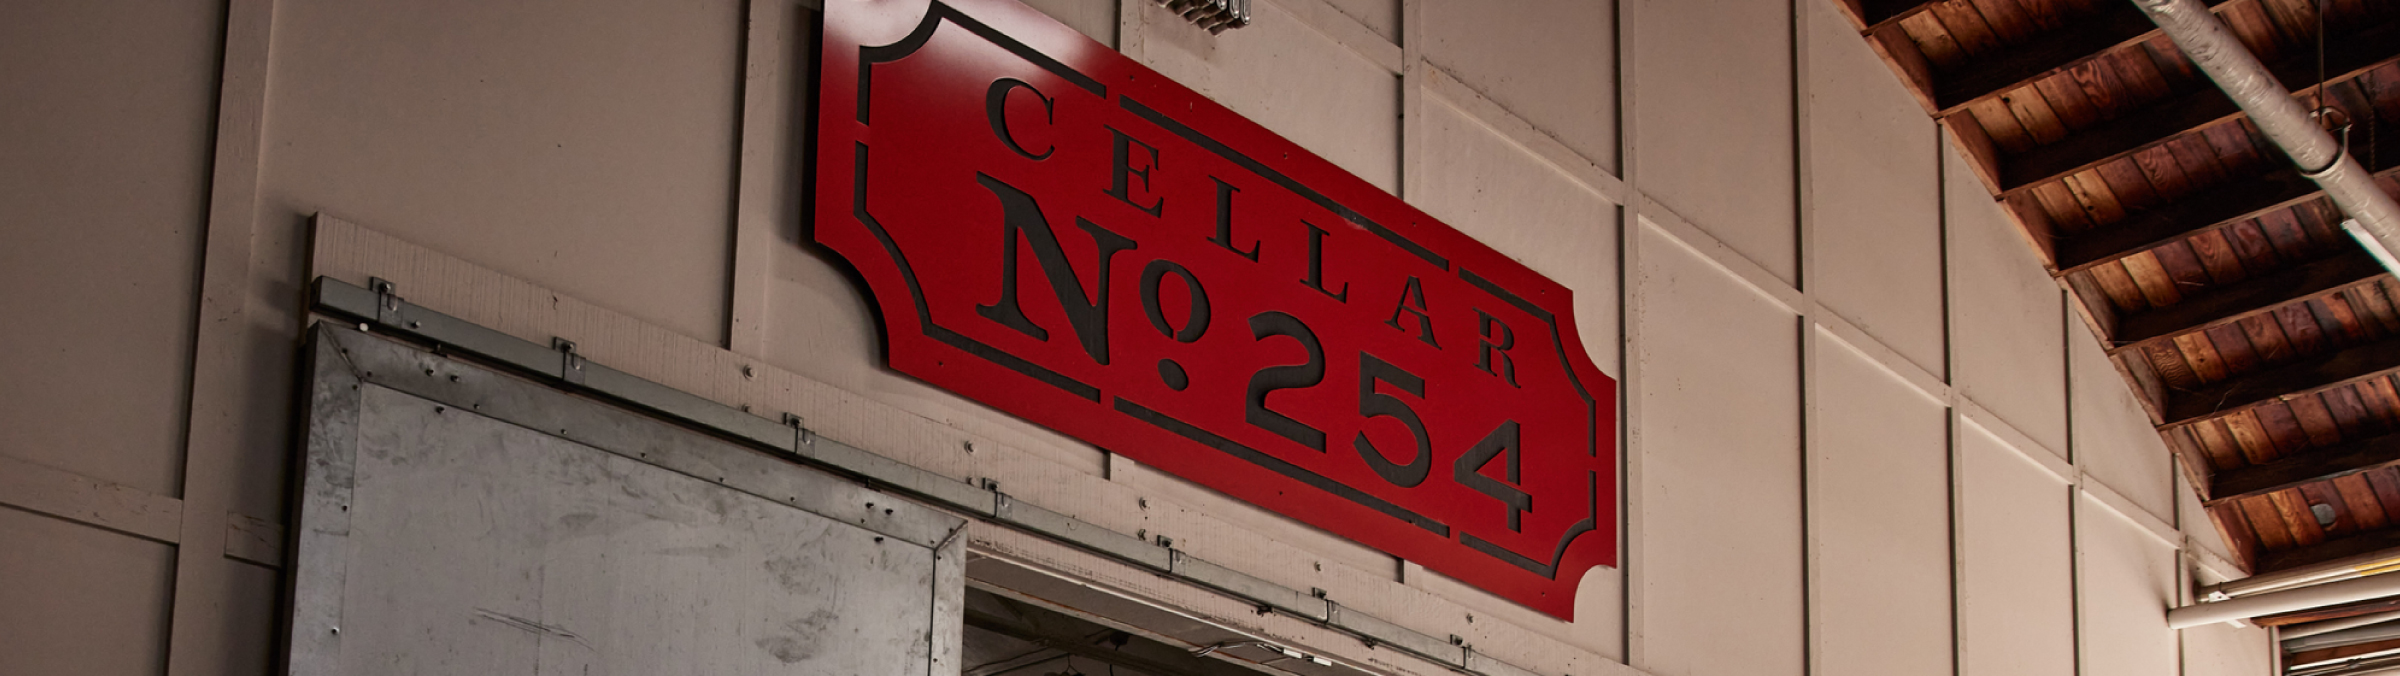 A red 'Cellar No.254' sign above a door.